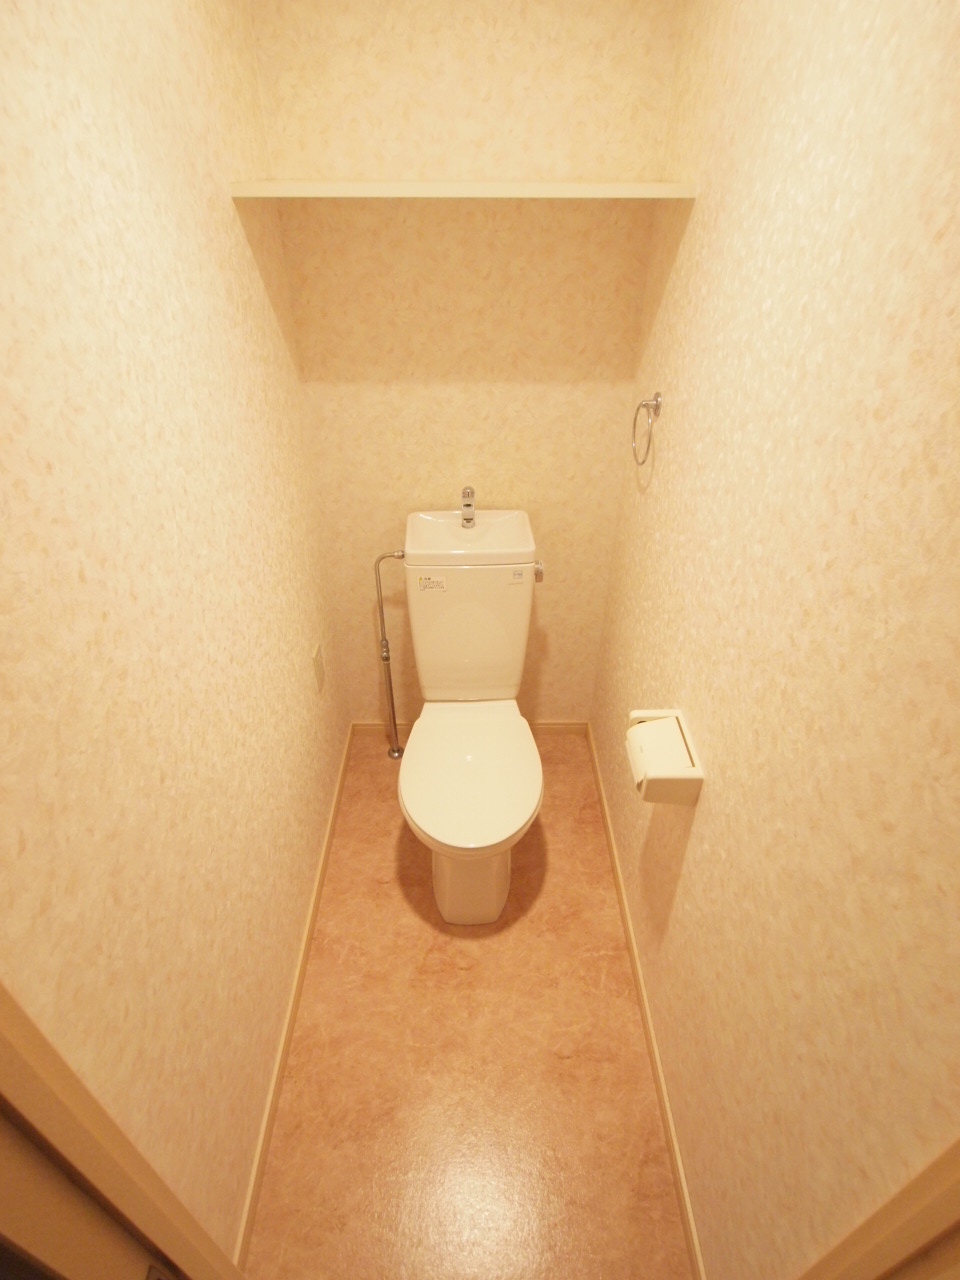 Toilet. Beautiful toilet. Size is also enough.